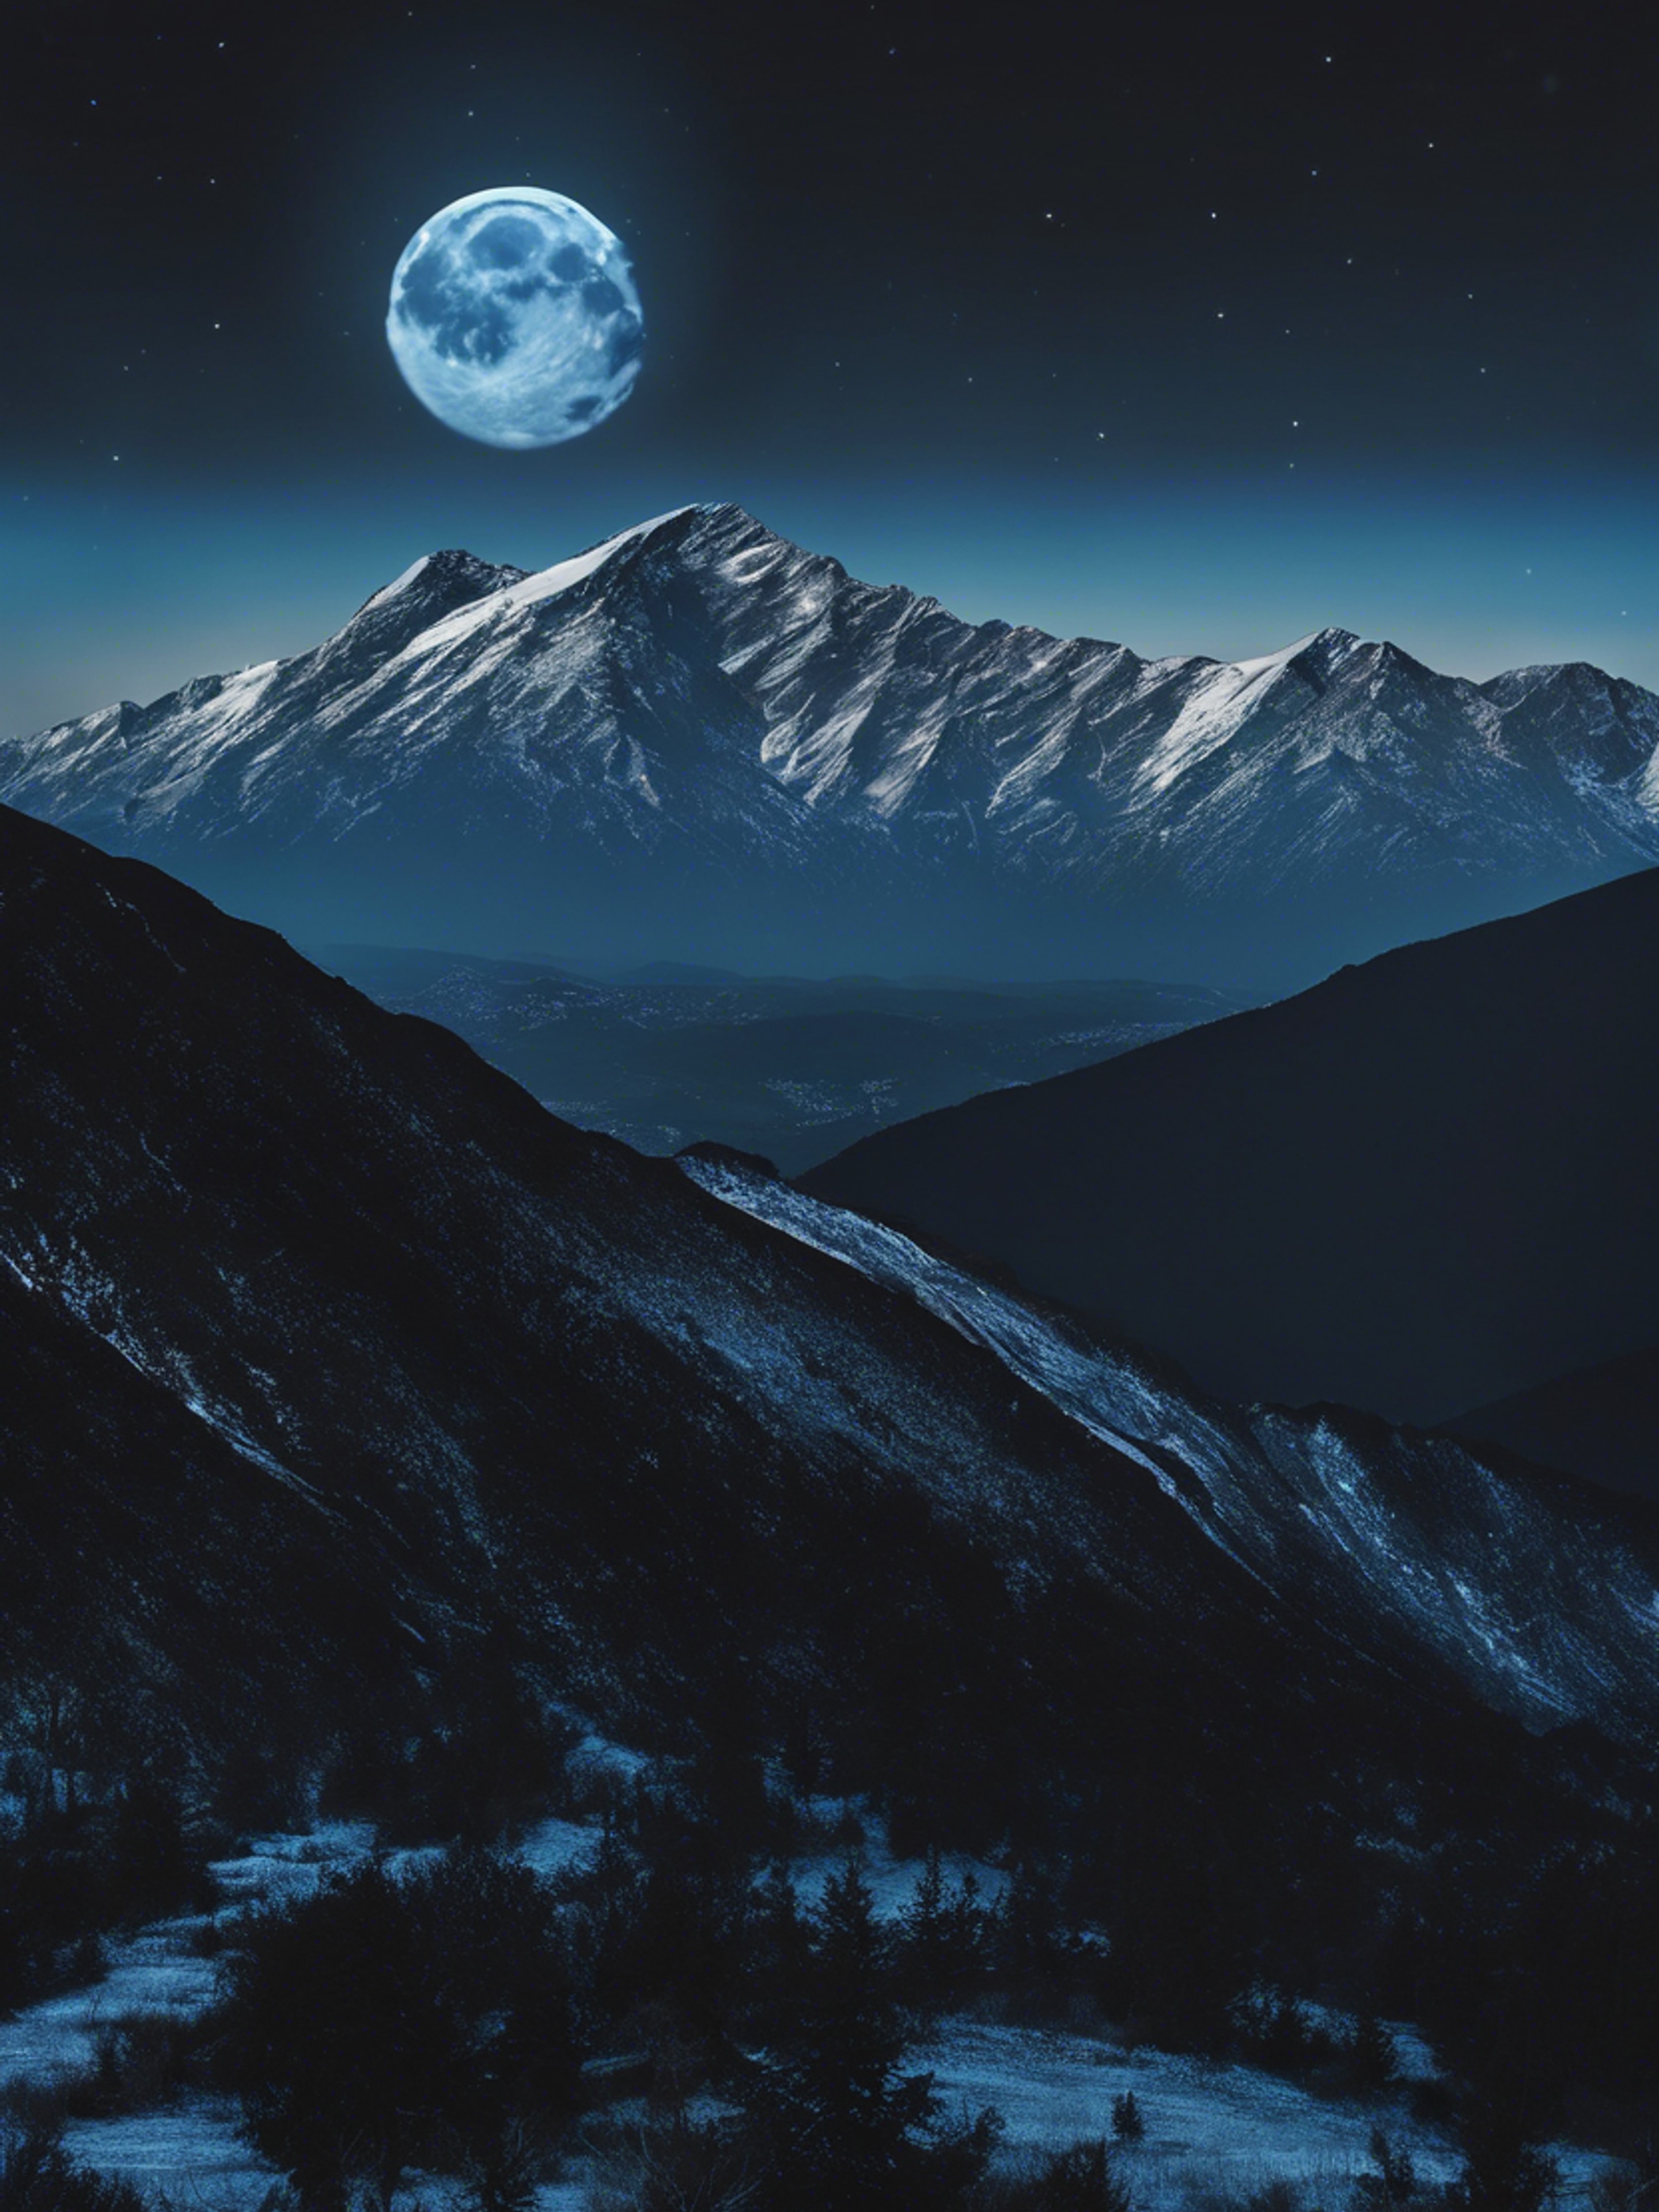 A calm blue moon illuminating the black silhouette of a serene mountain range.壁紙[e9e6a71abde94eeebdbf]